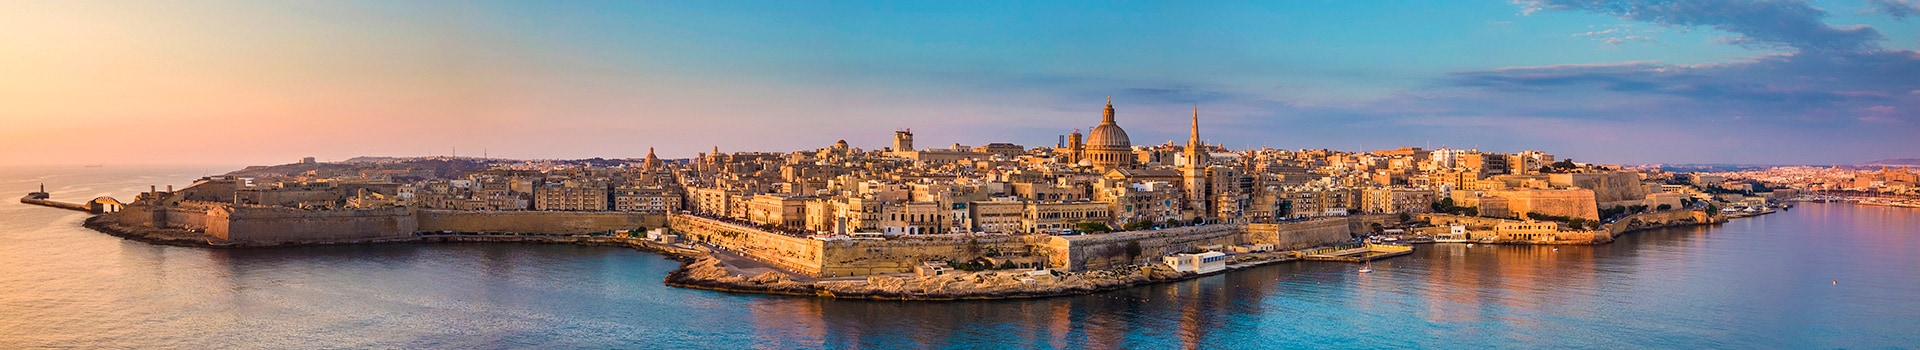 Billetes de Barco de Salerno a Malta